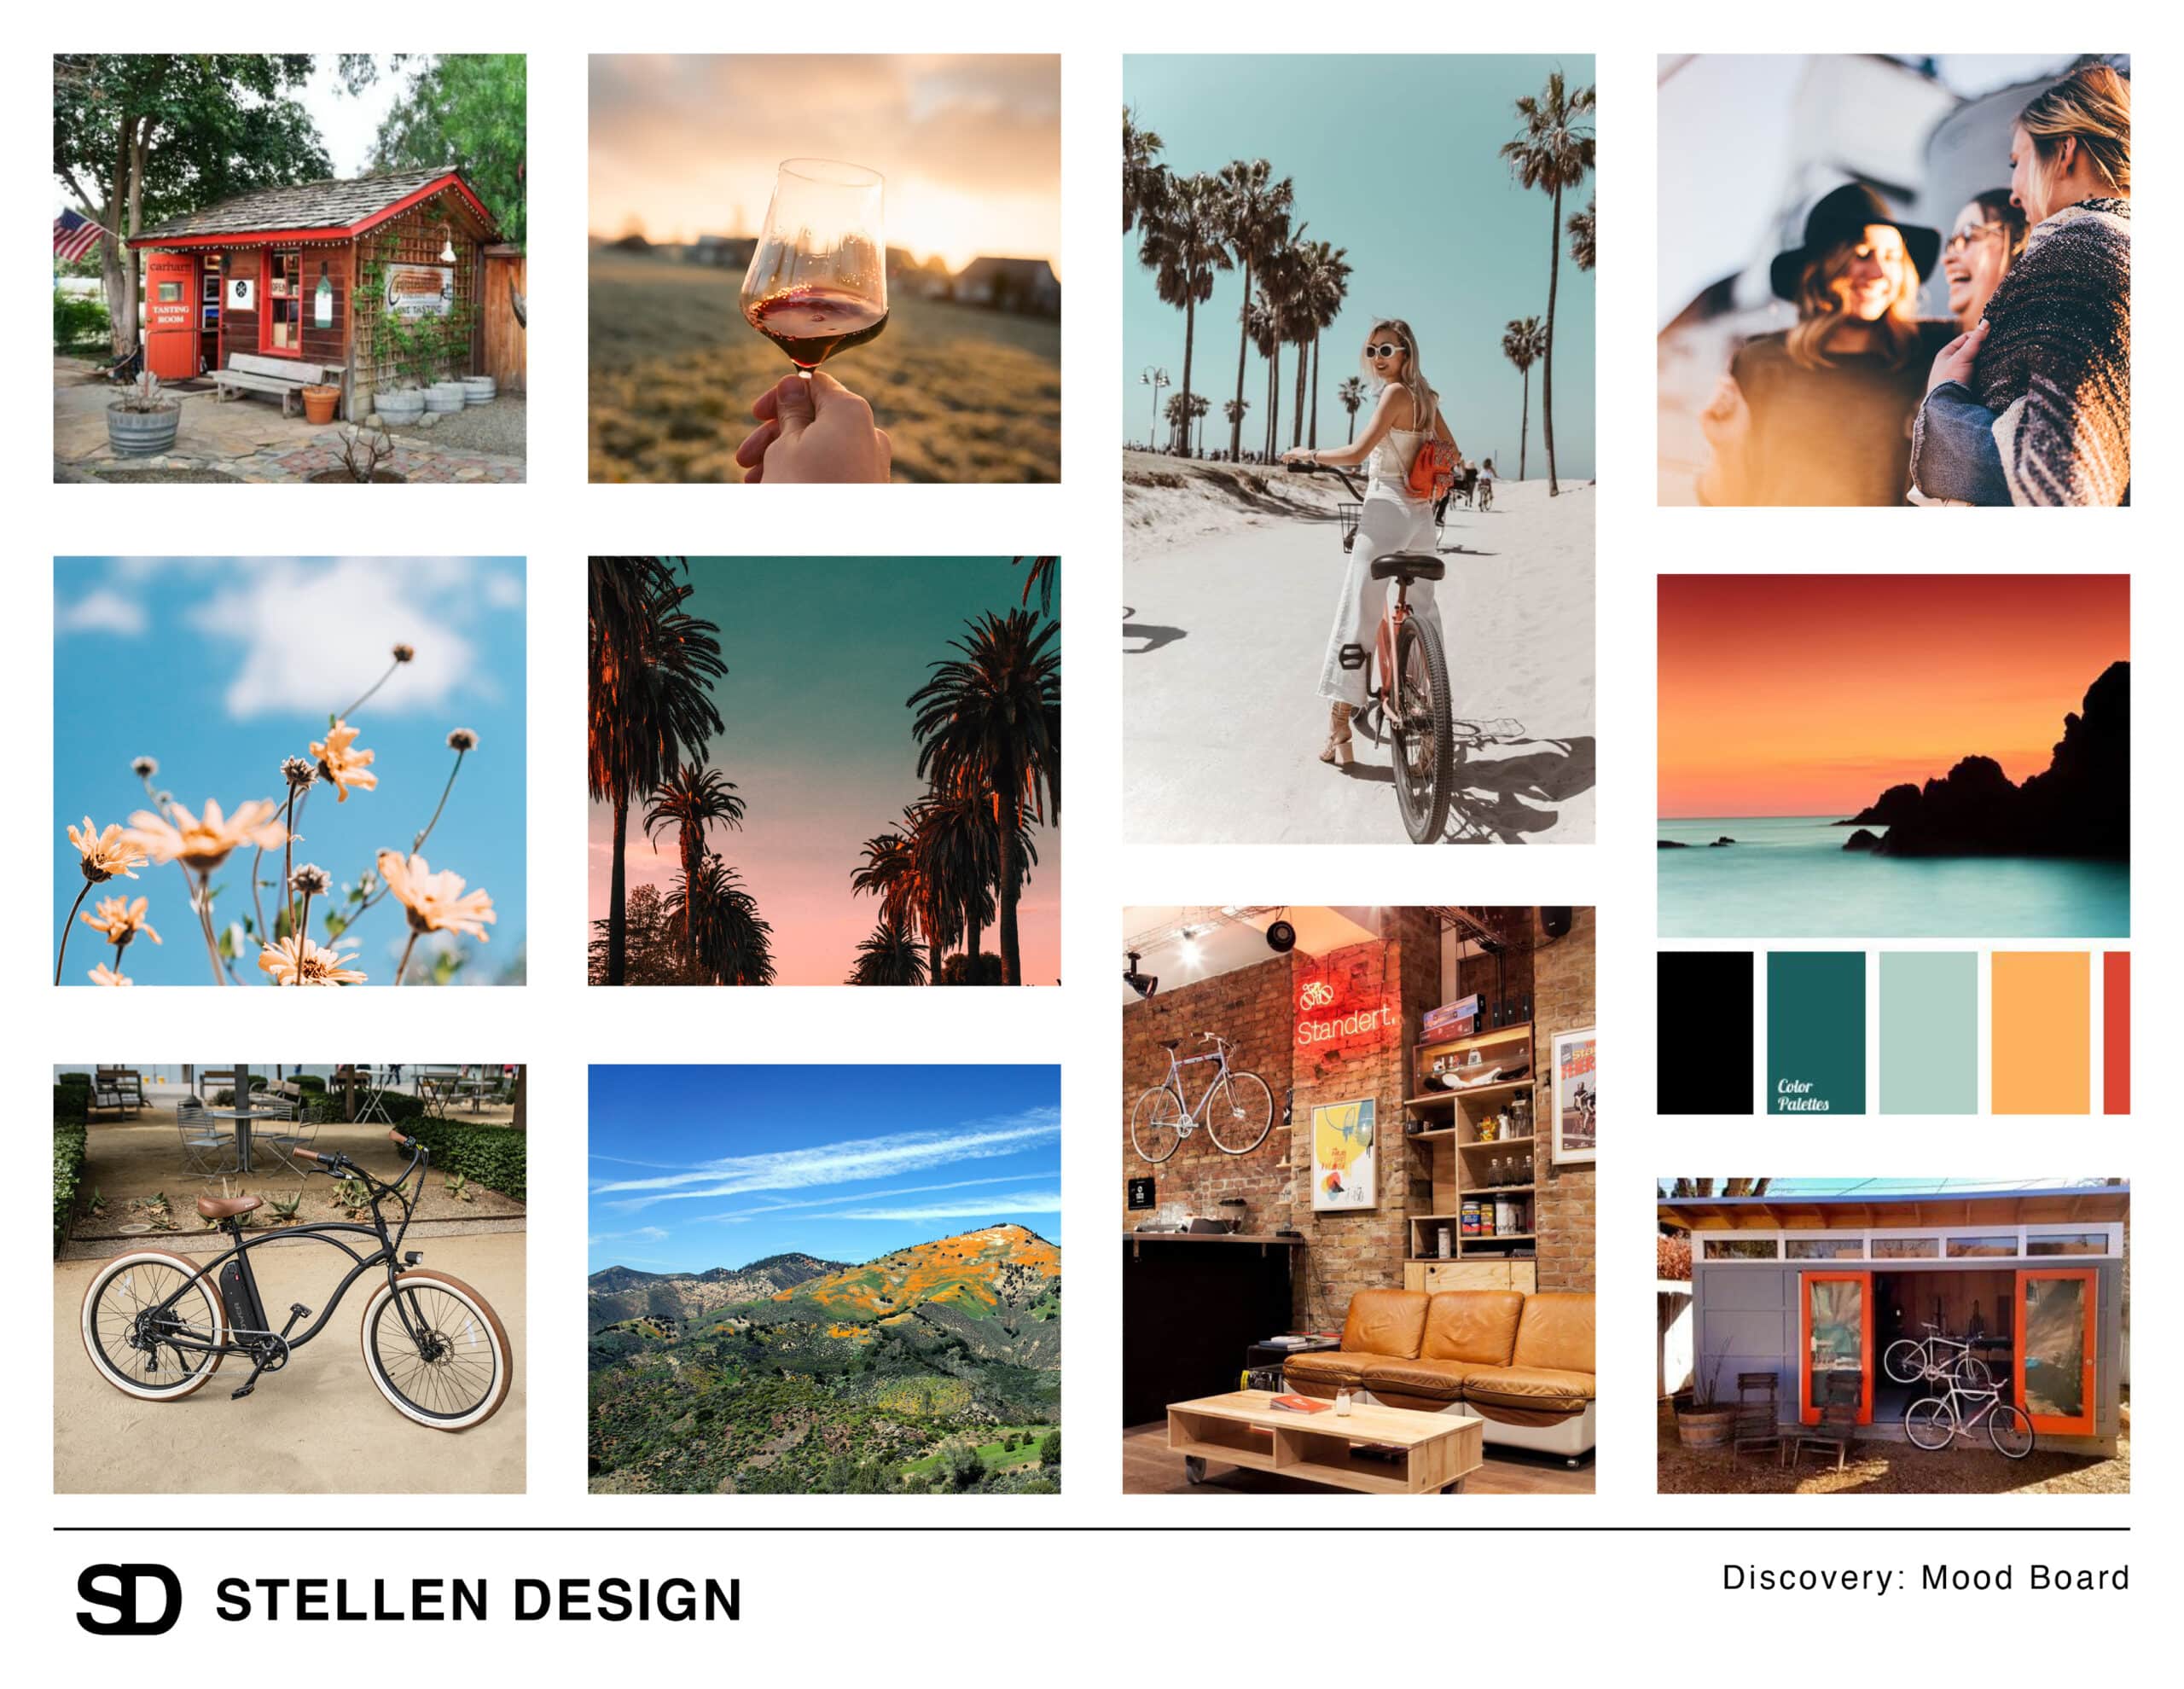 Local Bike Shop Branding Discovery by Stellen Design Branding Agency in Los Angeles CA